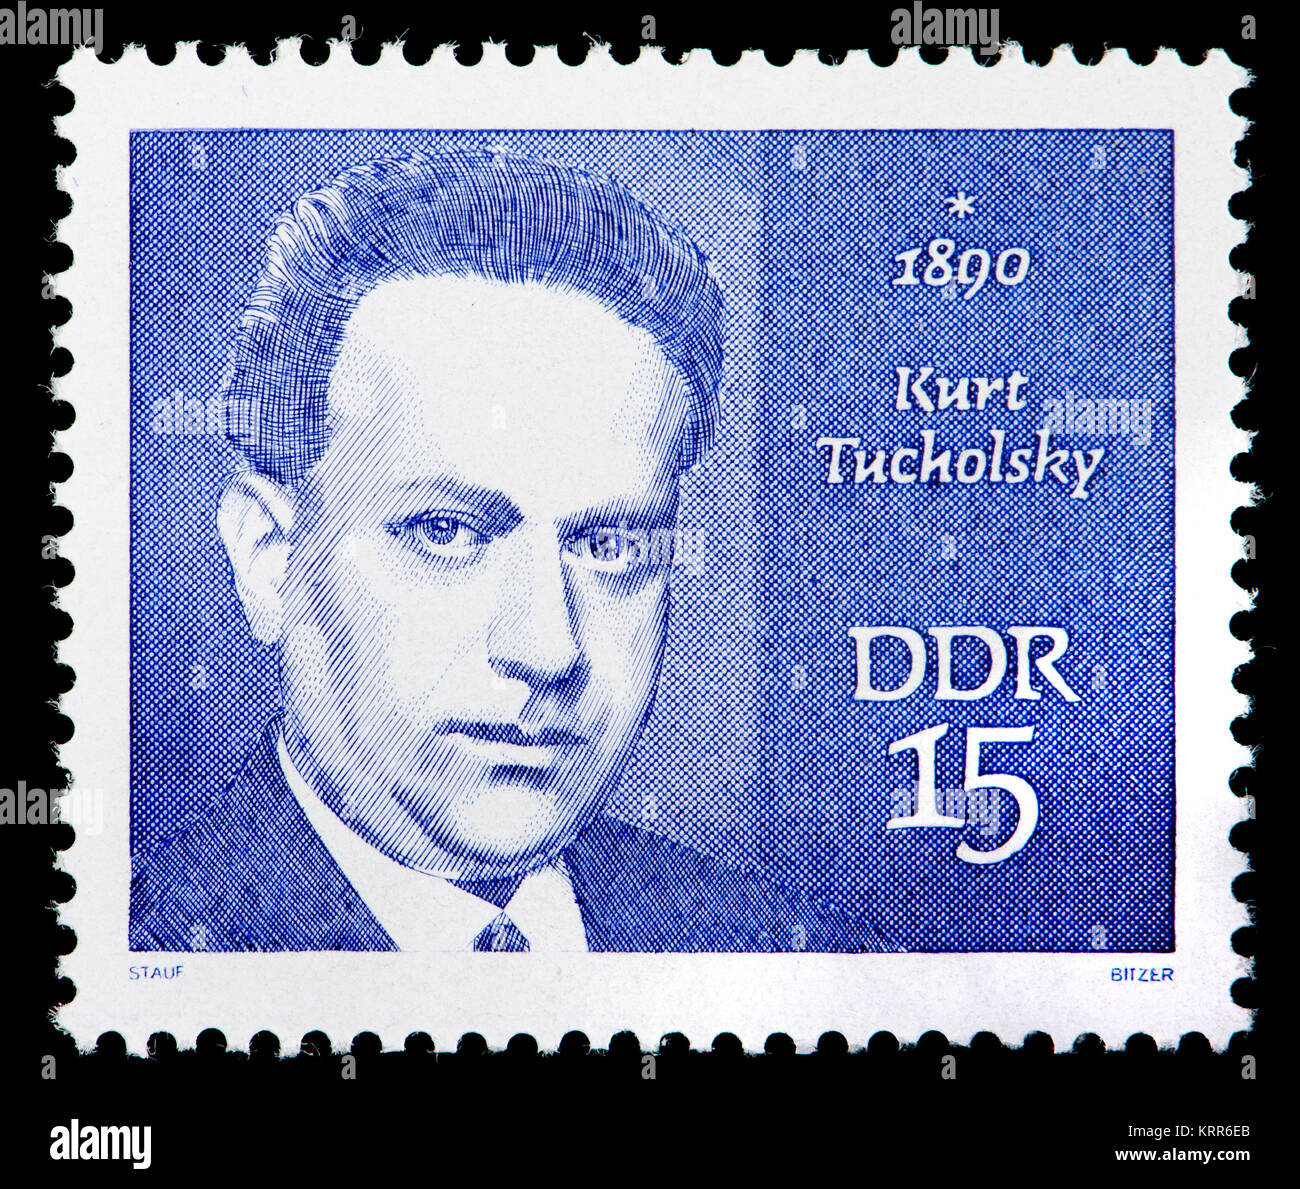 East German (DDR) postage stamp (1970): Kurt Tucholsky (1890 – 1935) German-Jewish journalist, satirist, and writer. Wrote under the pseudonyms Kaspar Stock Photo